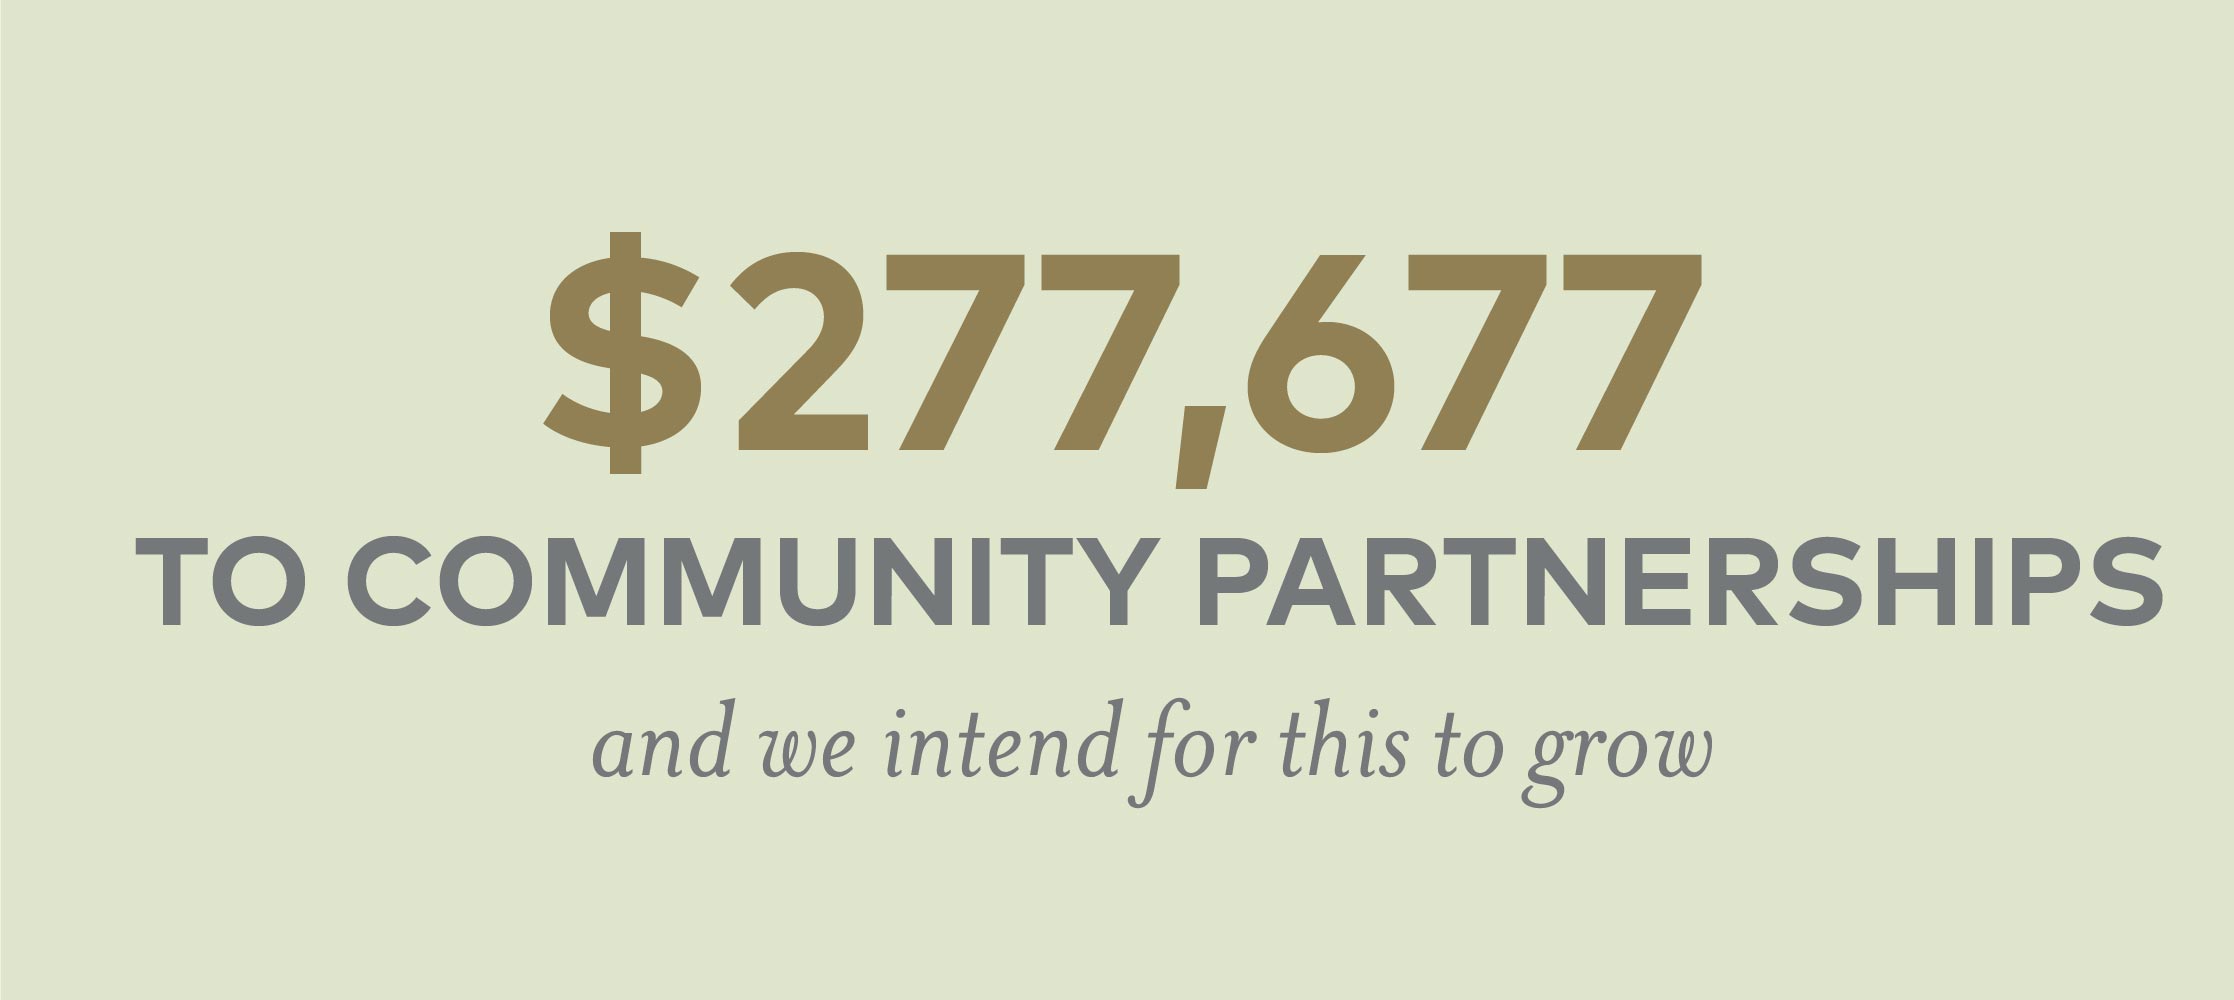 277,677 in community partnerships